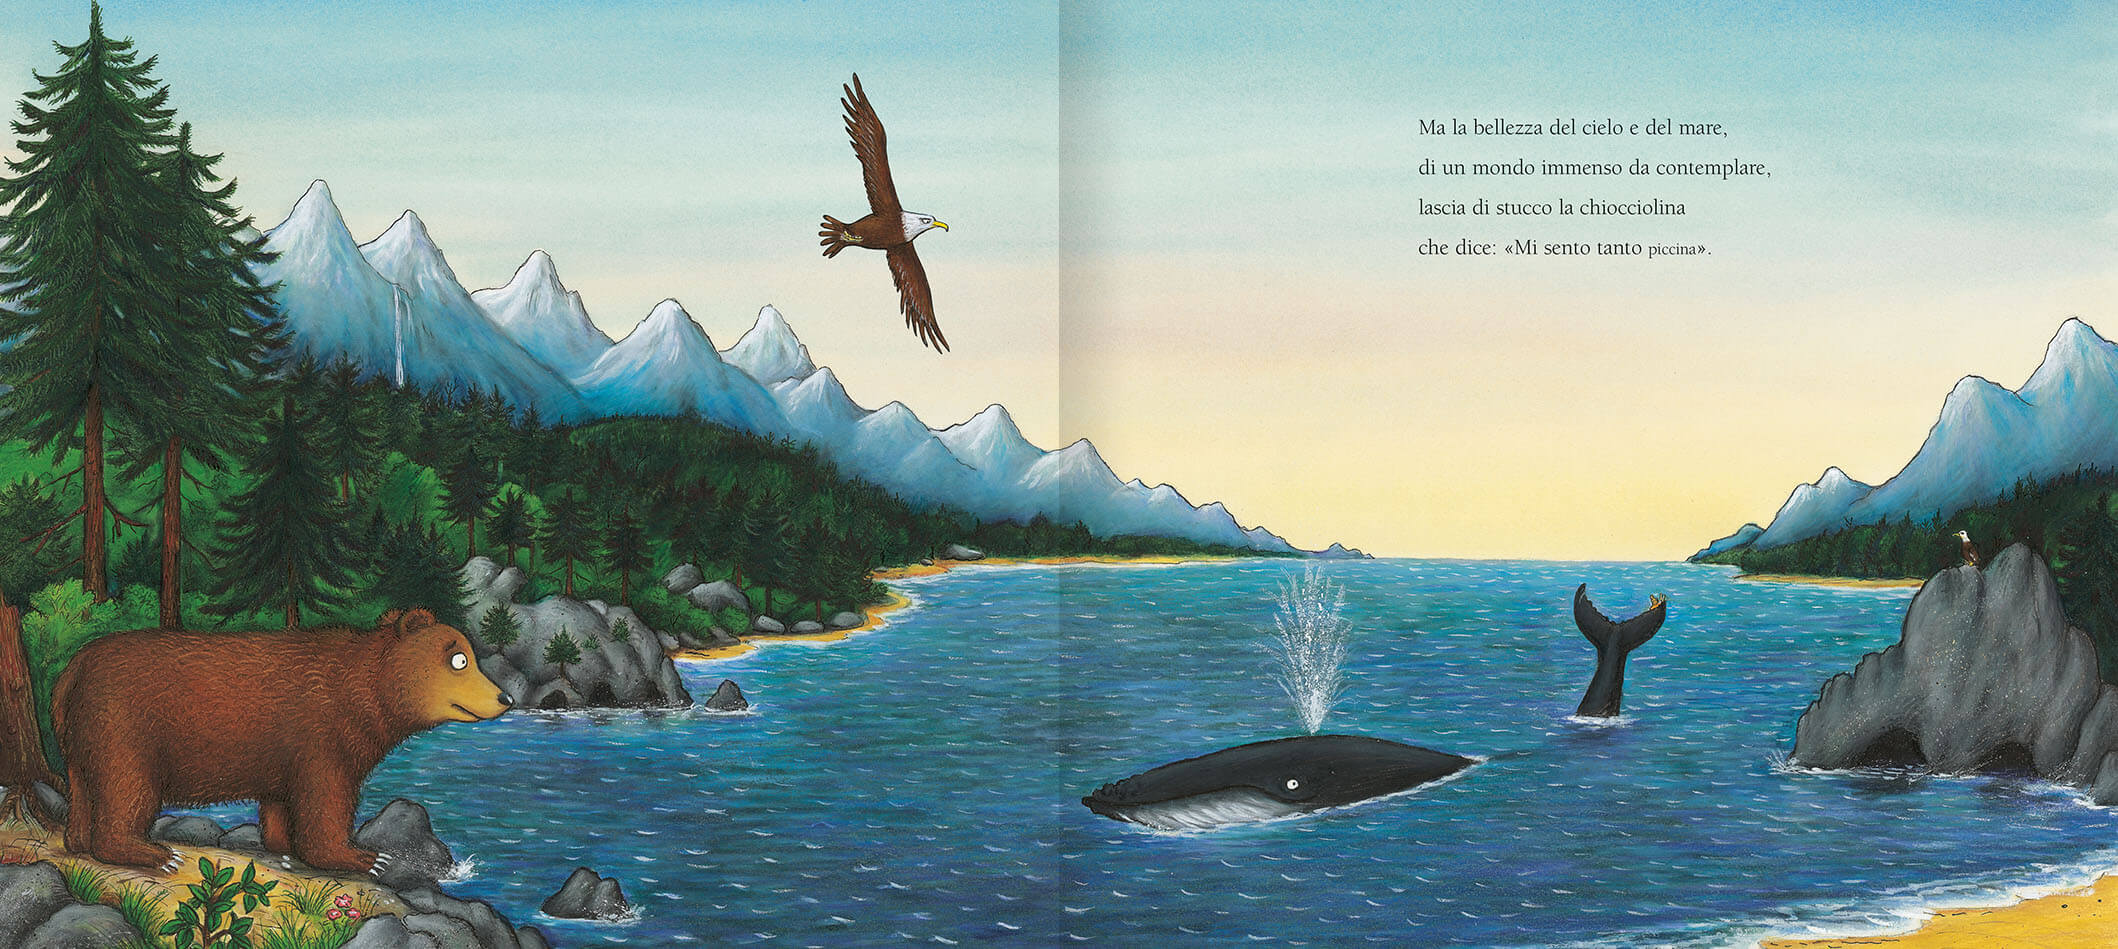 La chiocciolina e la balena (Libro in Russo) - Compra Online su KnigaGolik